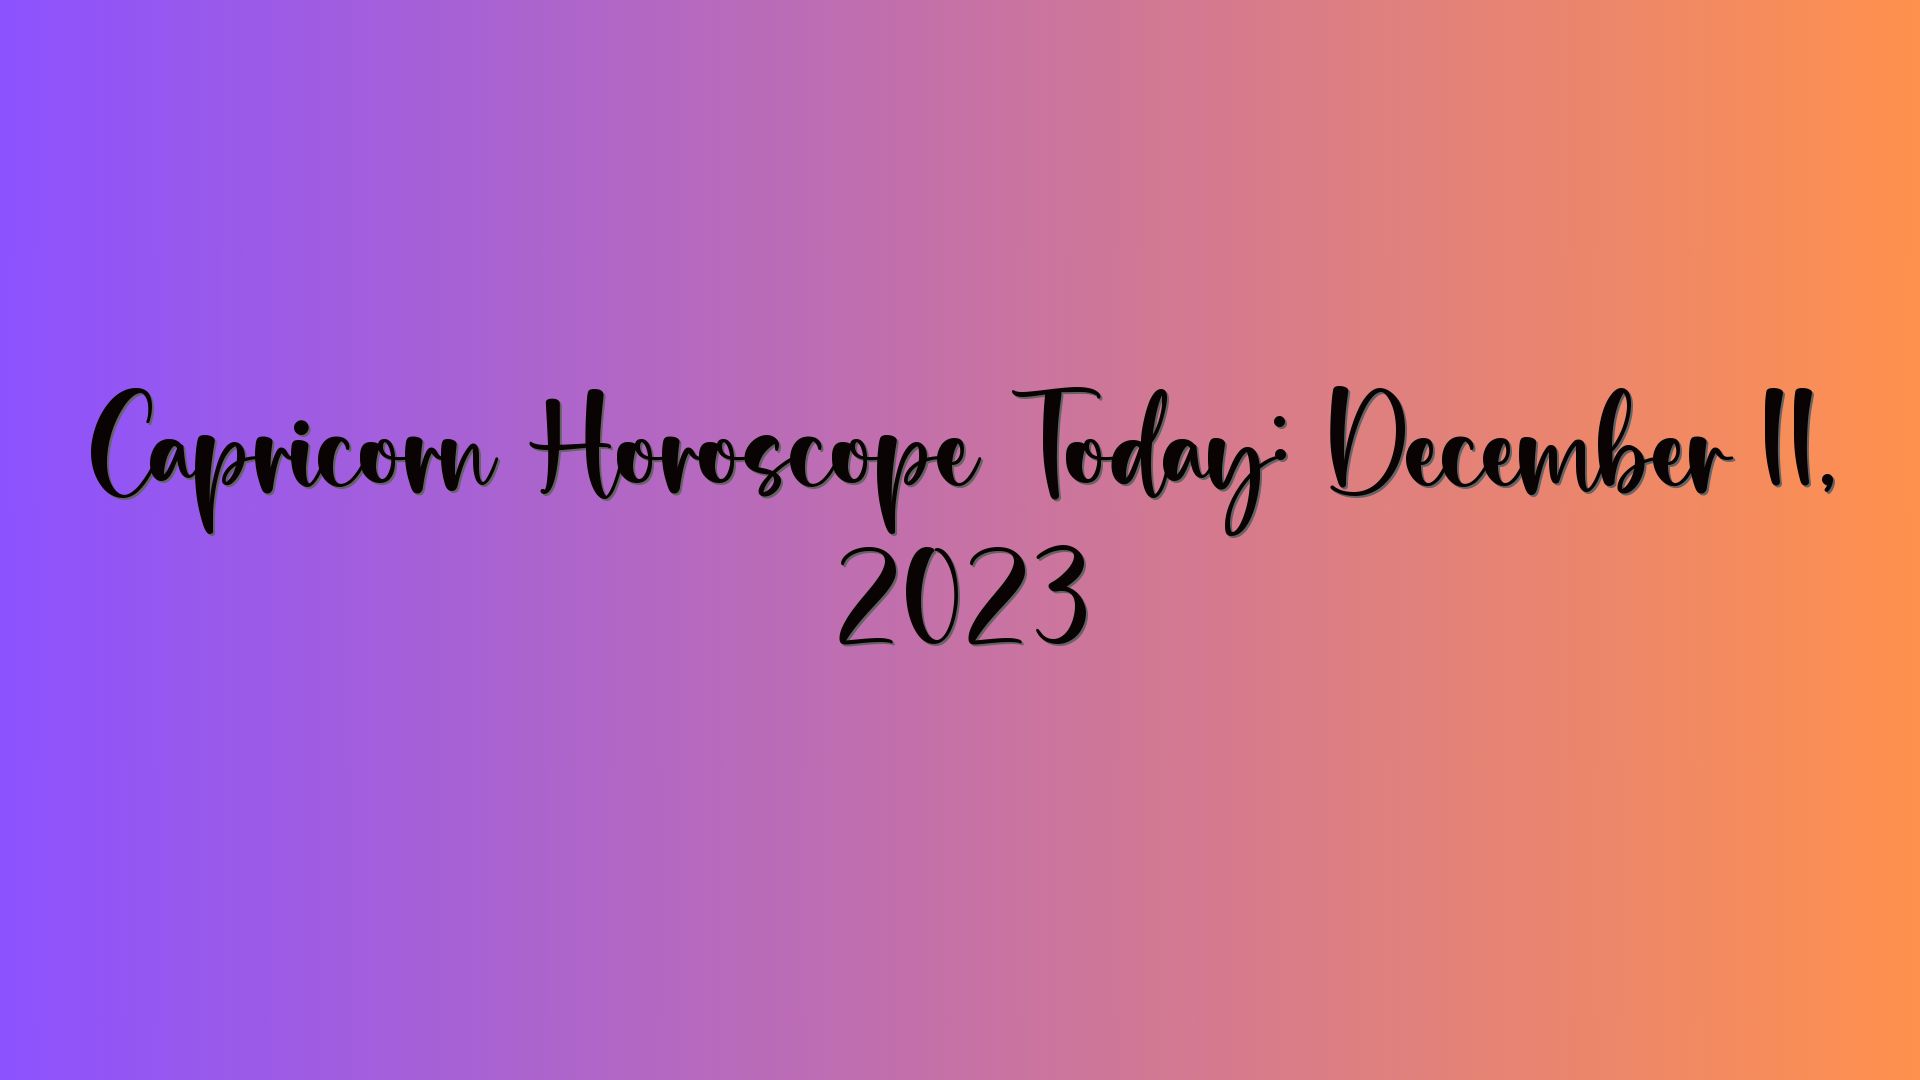 Capricorn Horoscope Today: December 11, 2023